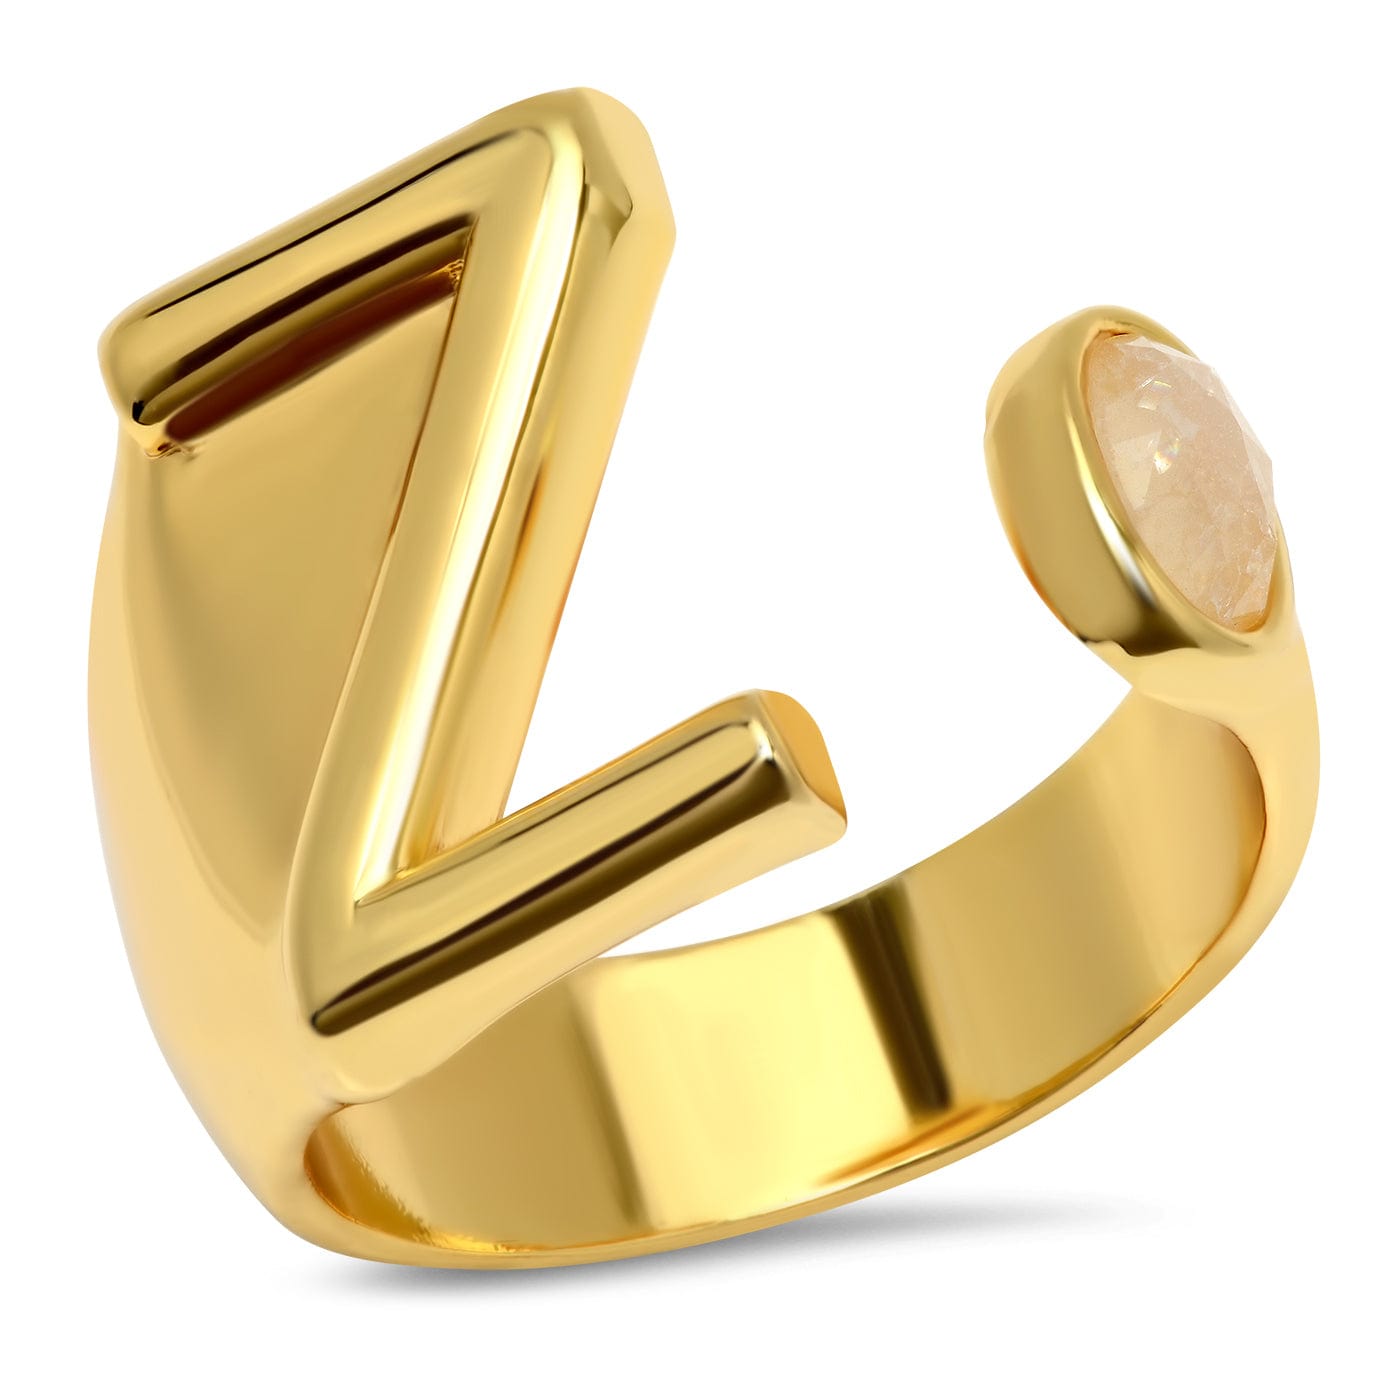 TAI JEWELRY Rings Z Initial Wrap Ring